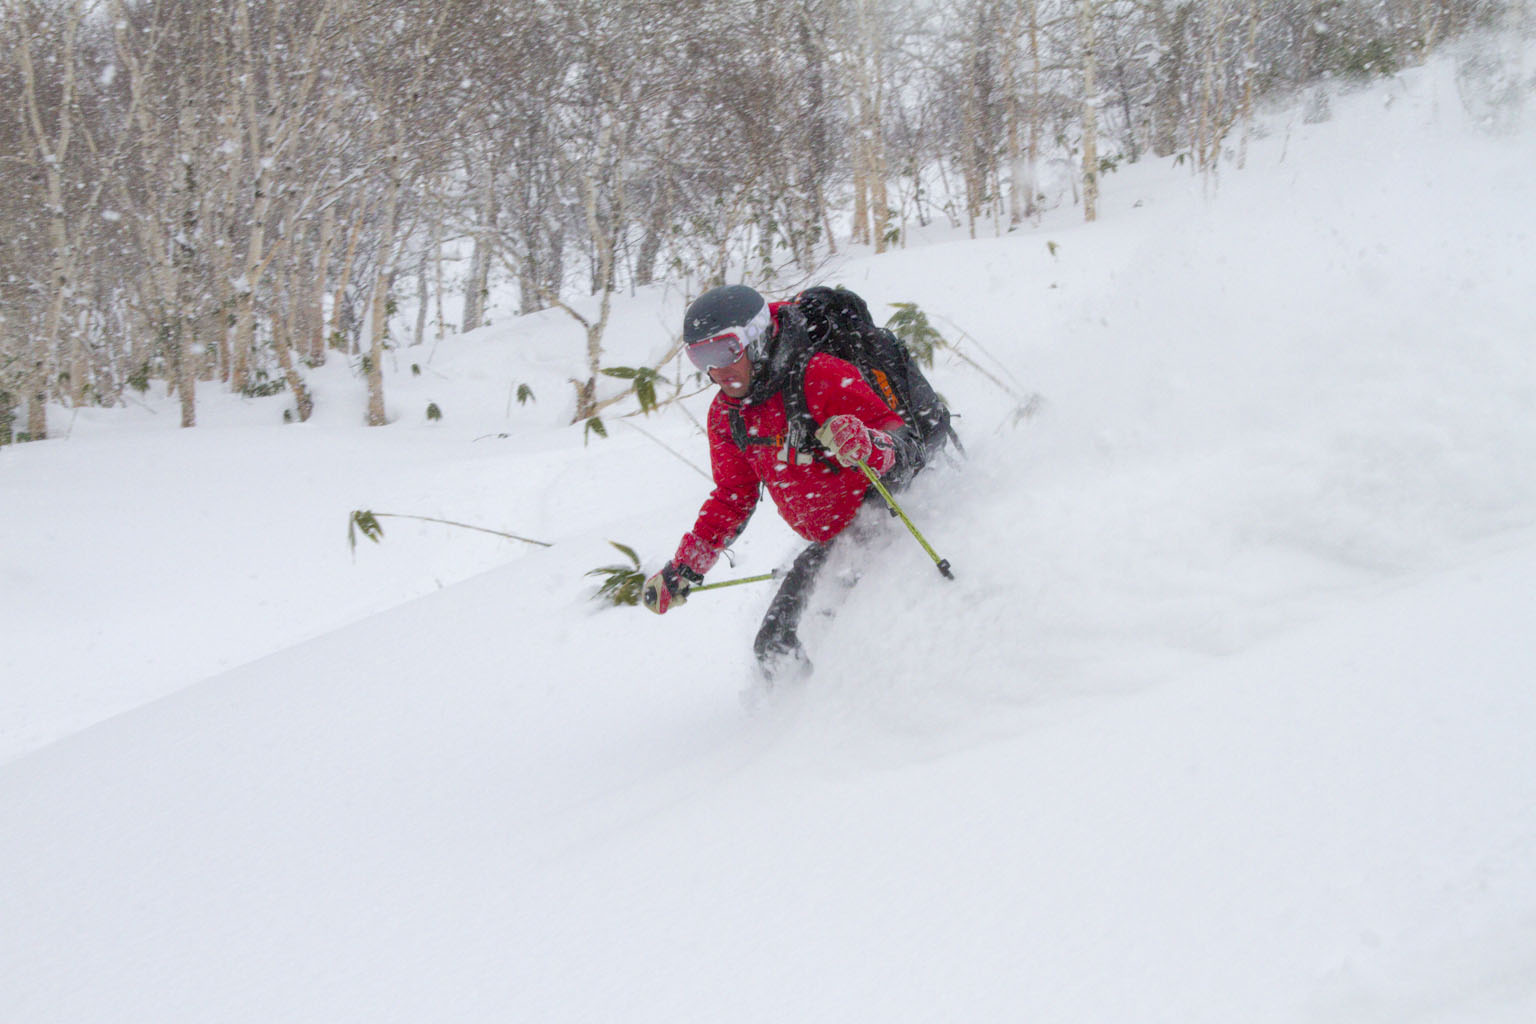 Anders Aidanp skiing powder in Japan, 4th Jan 2011. Photo: Andreas Bengtsson